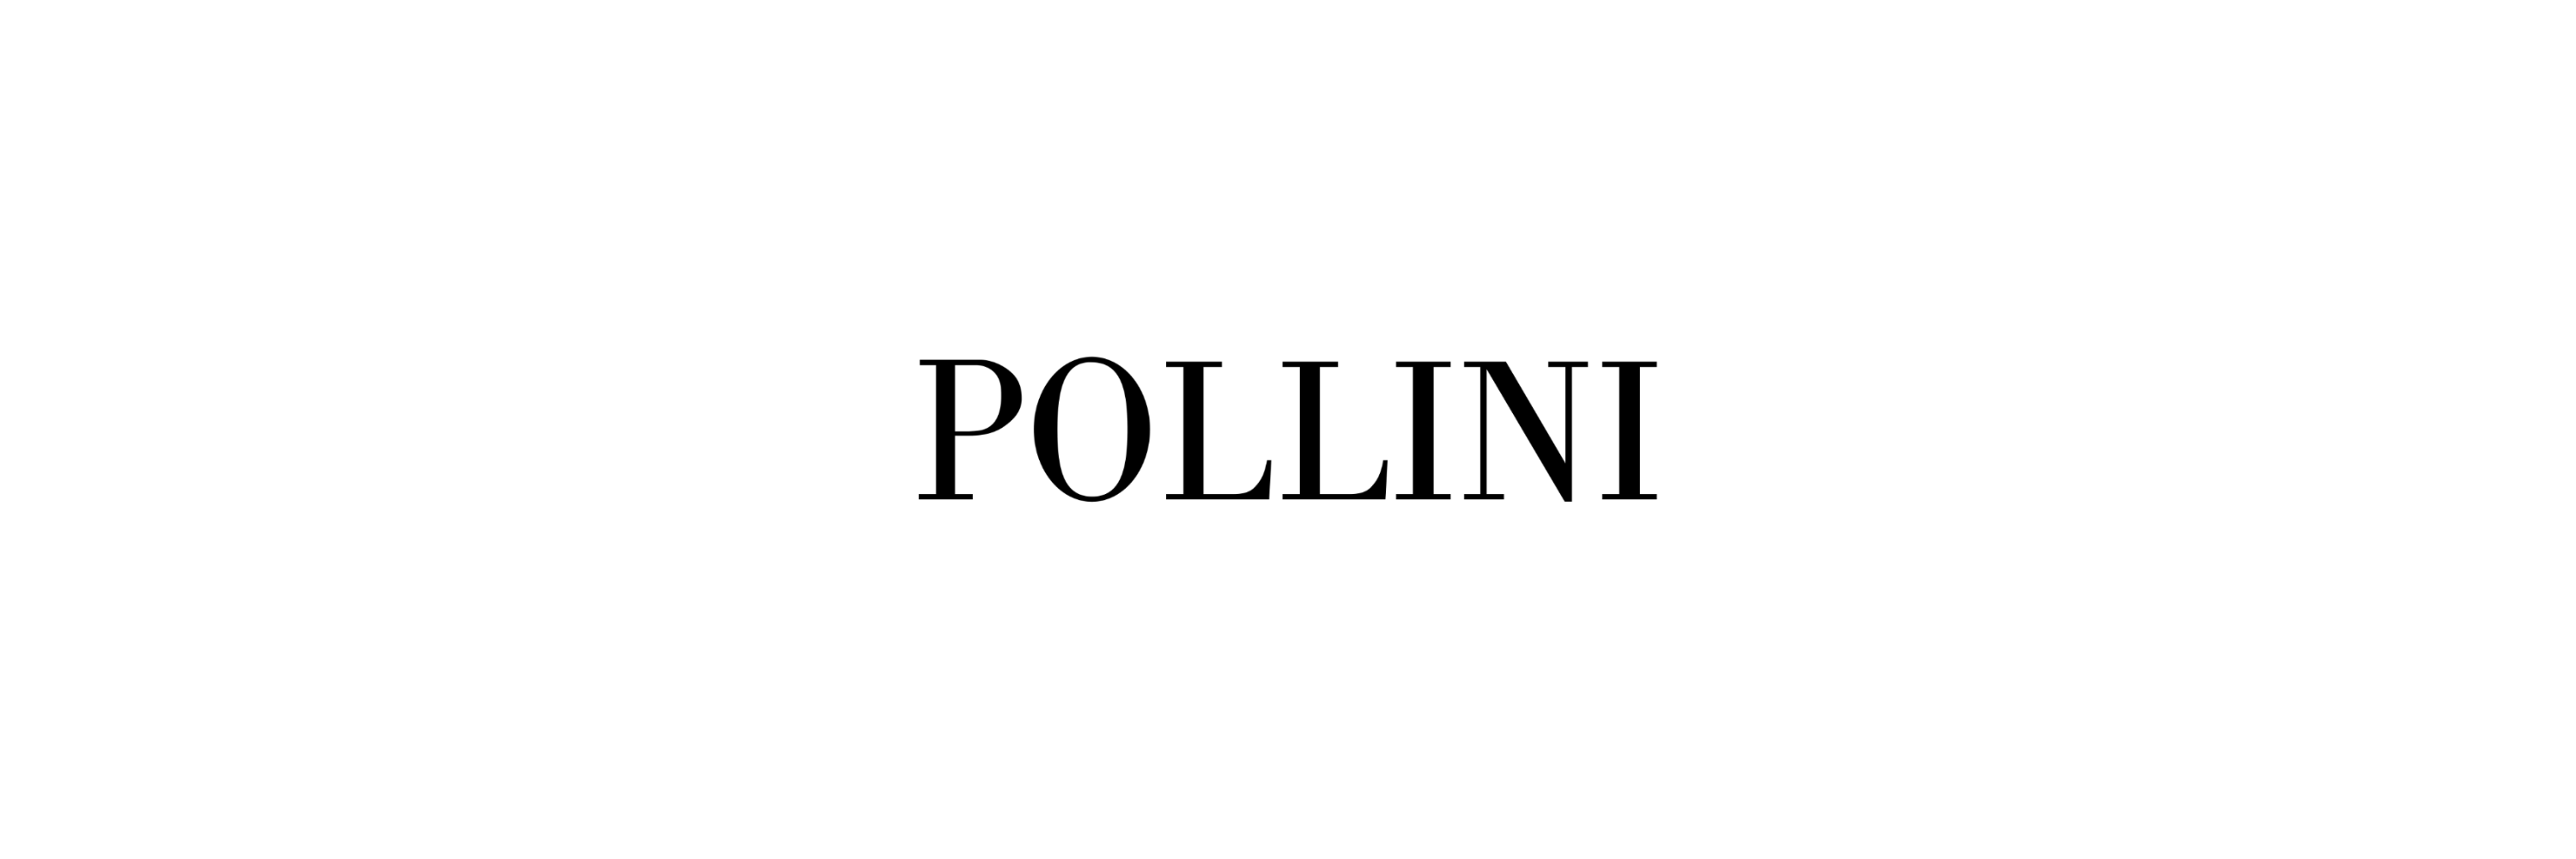 Calzature Pollini